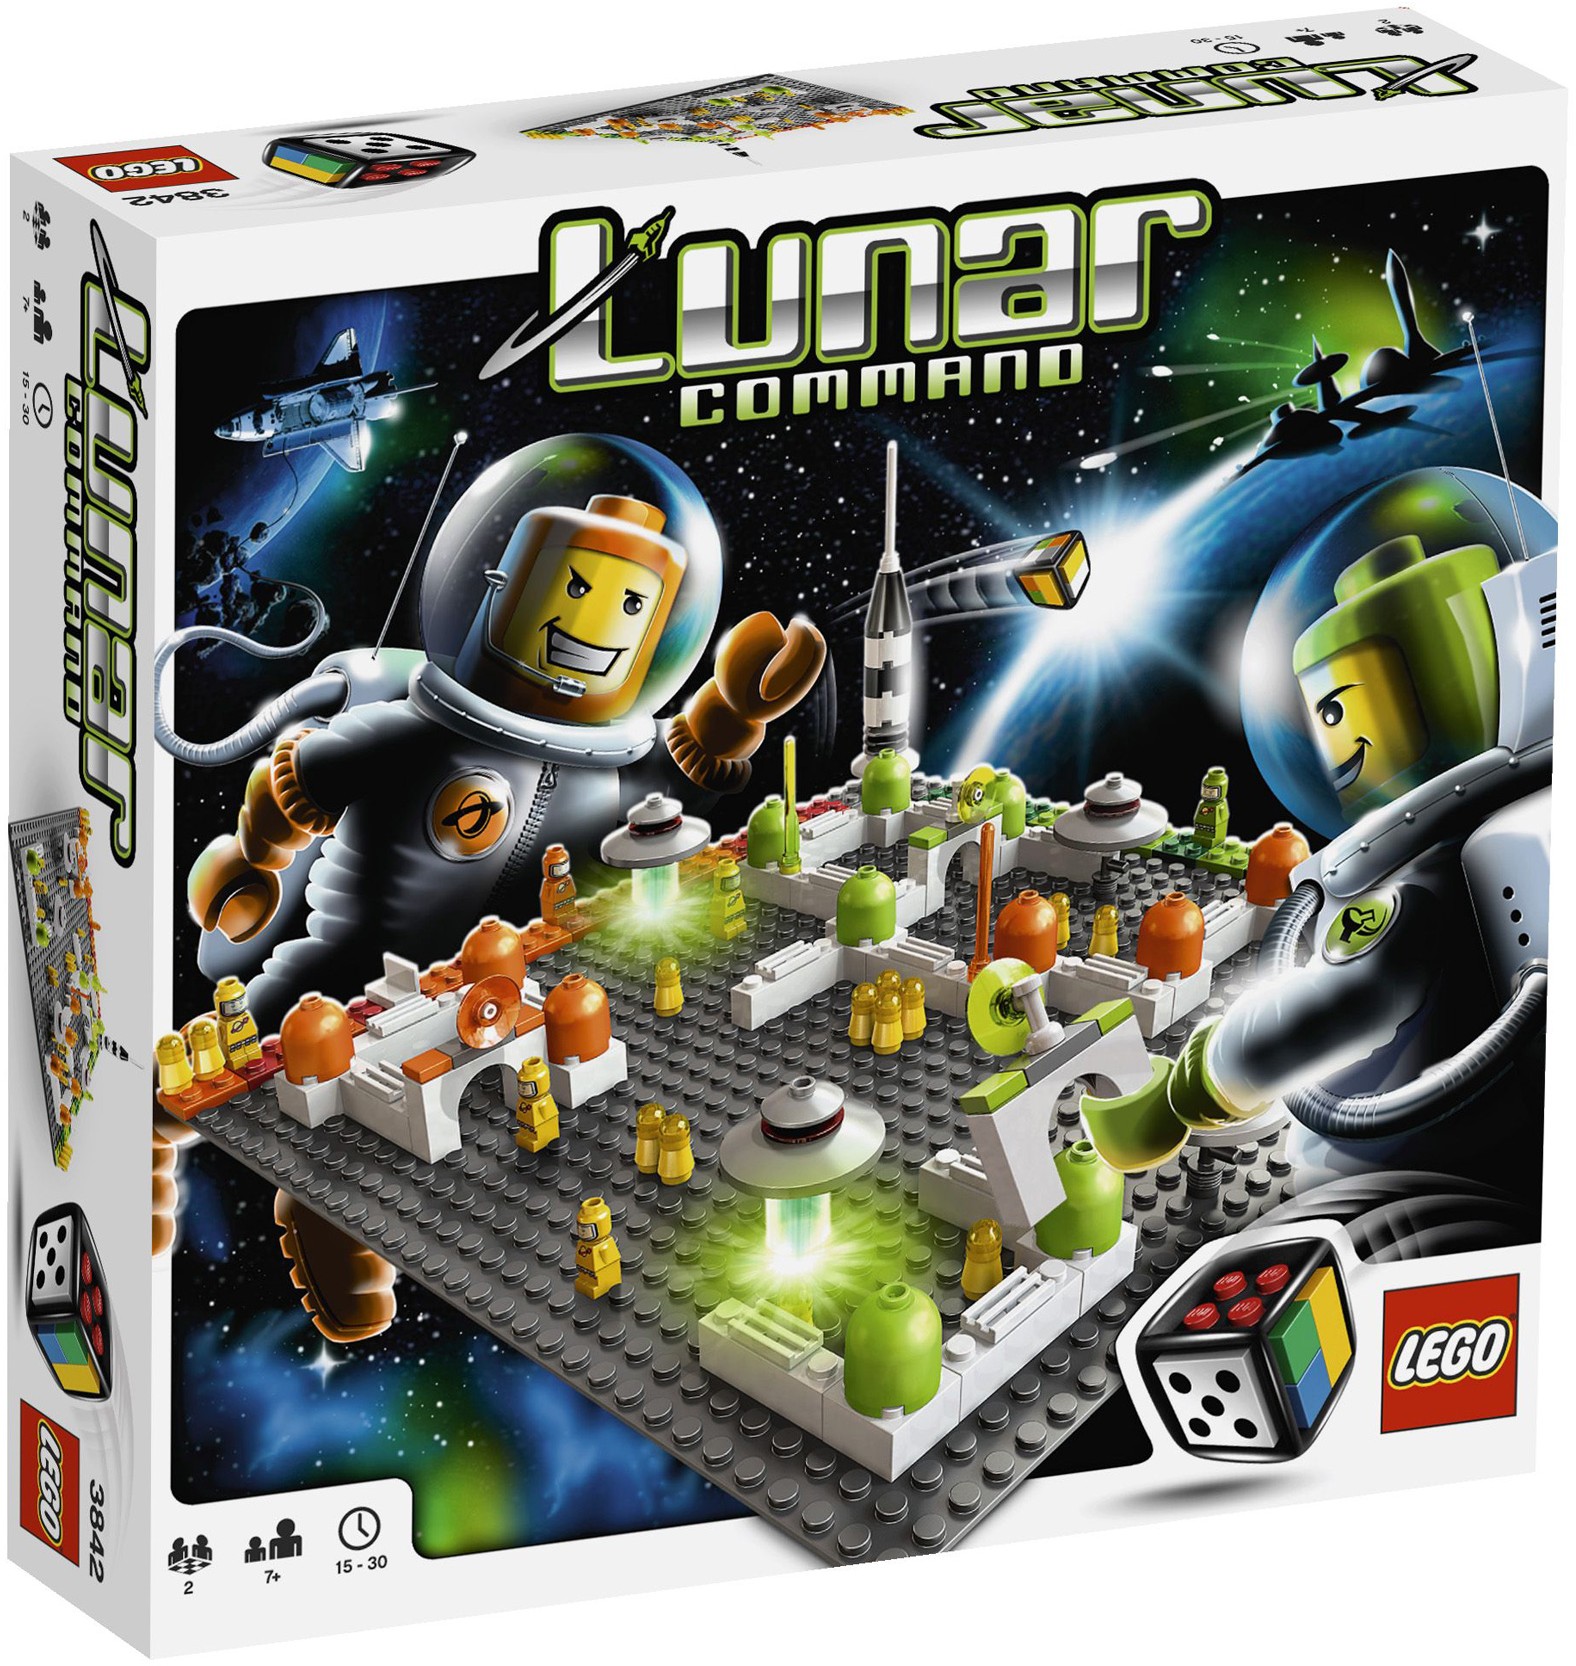 Games | Brickset: LEGO set and